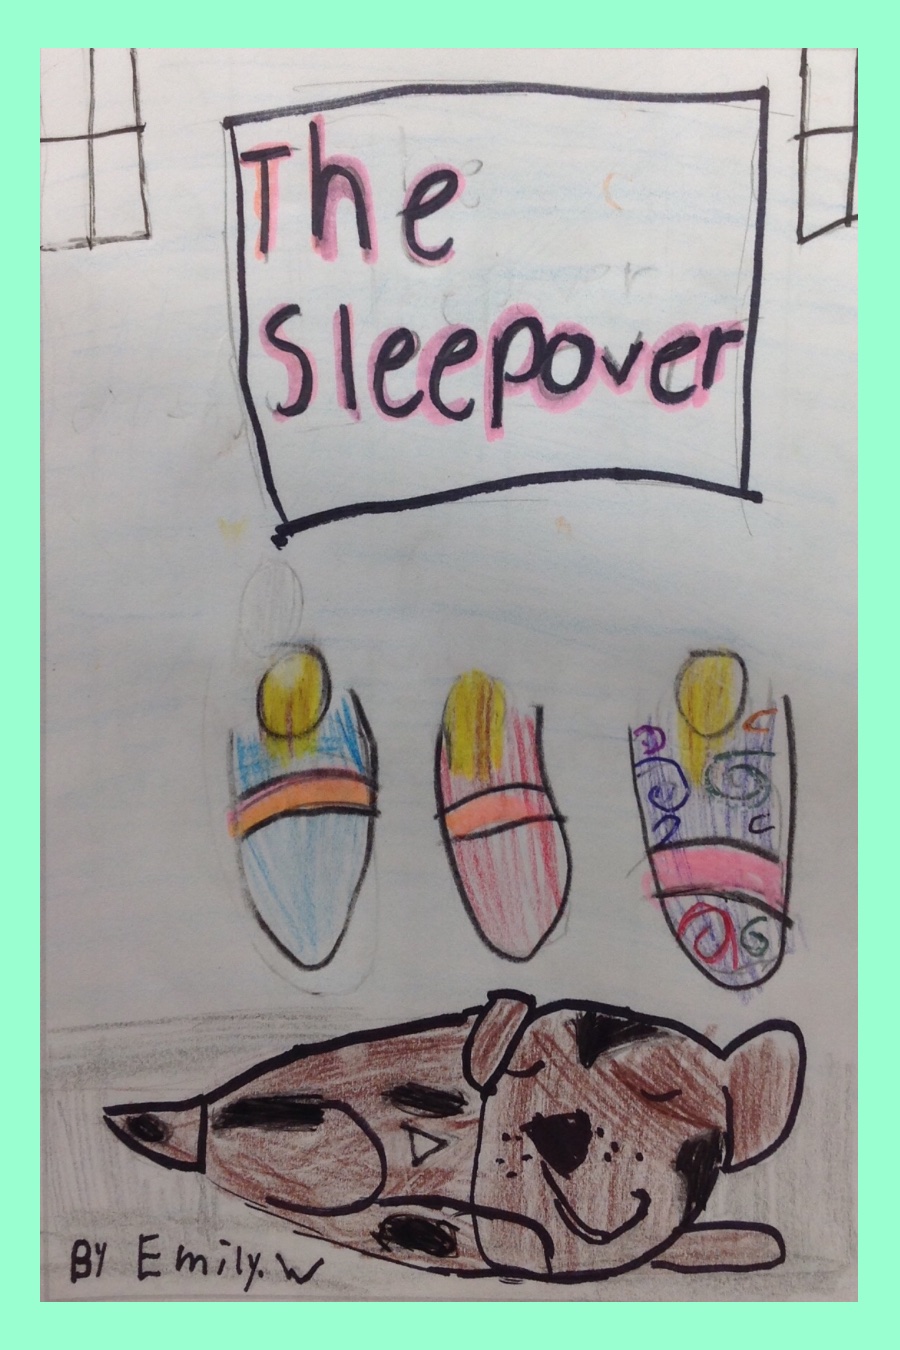 The Sleepover by Emily W